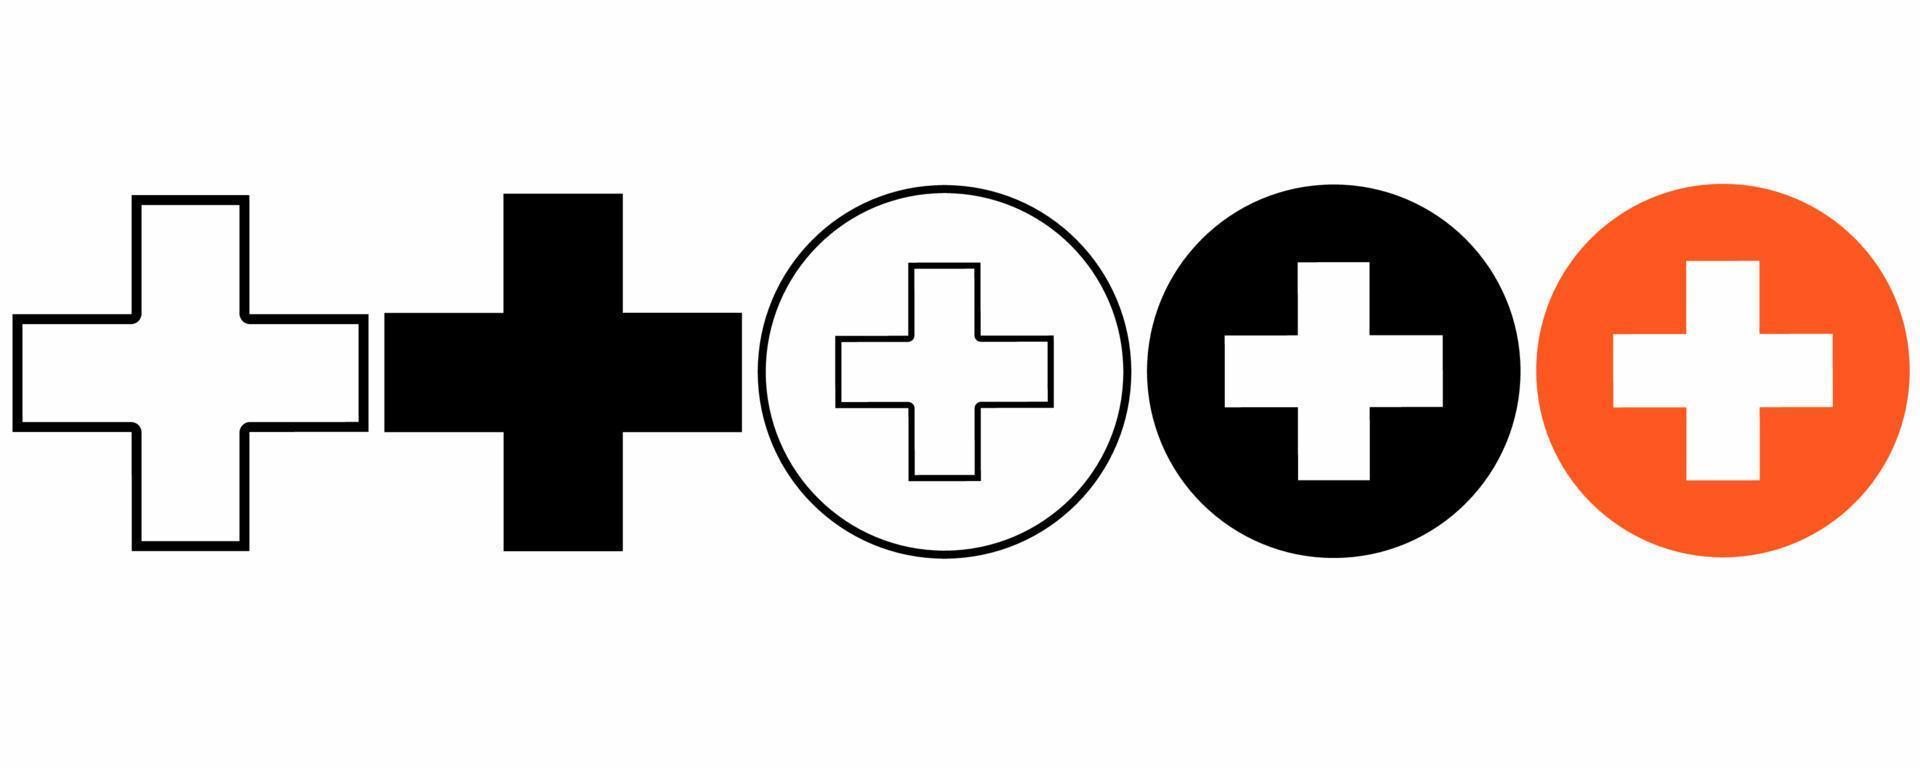 médico Cruz símbolo conjunto isolado em branco fundo vetor